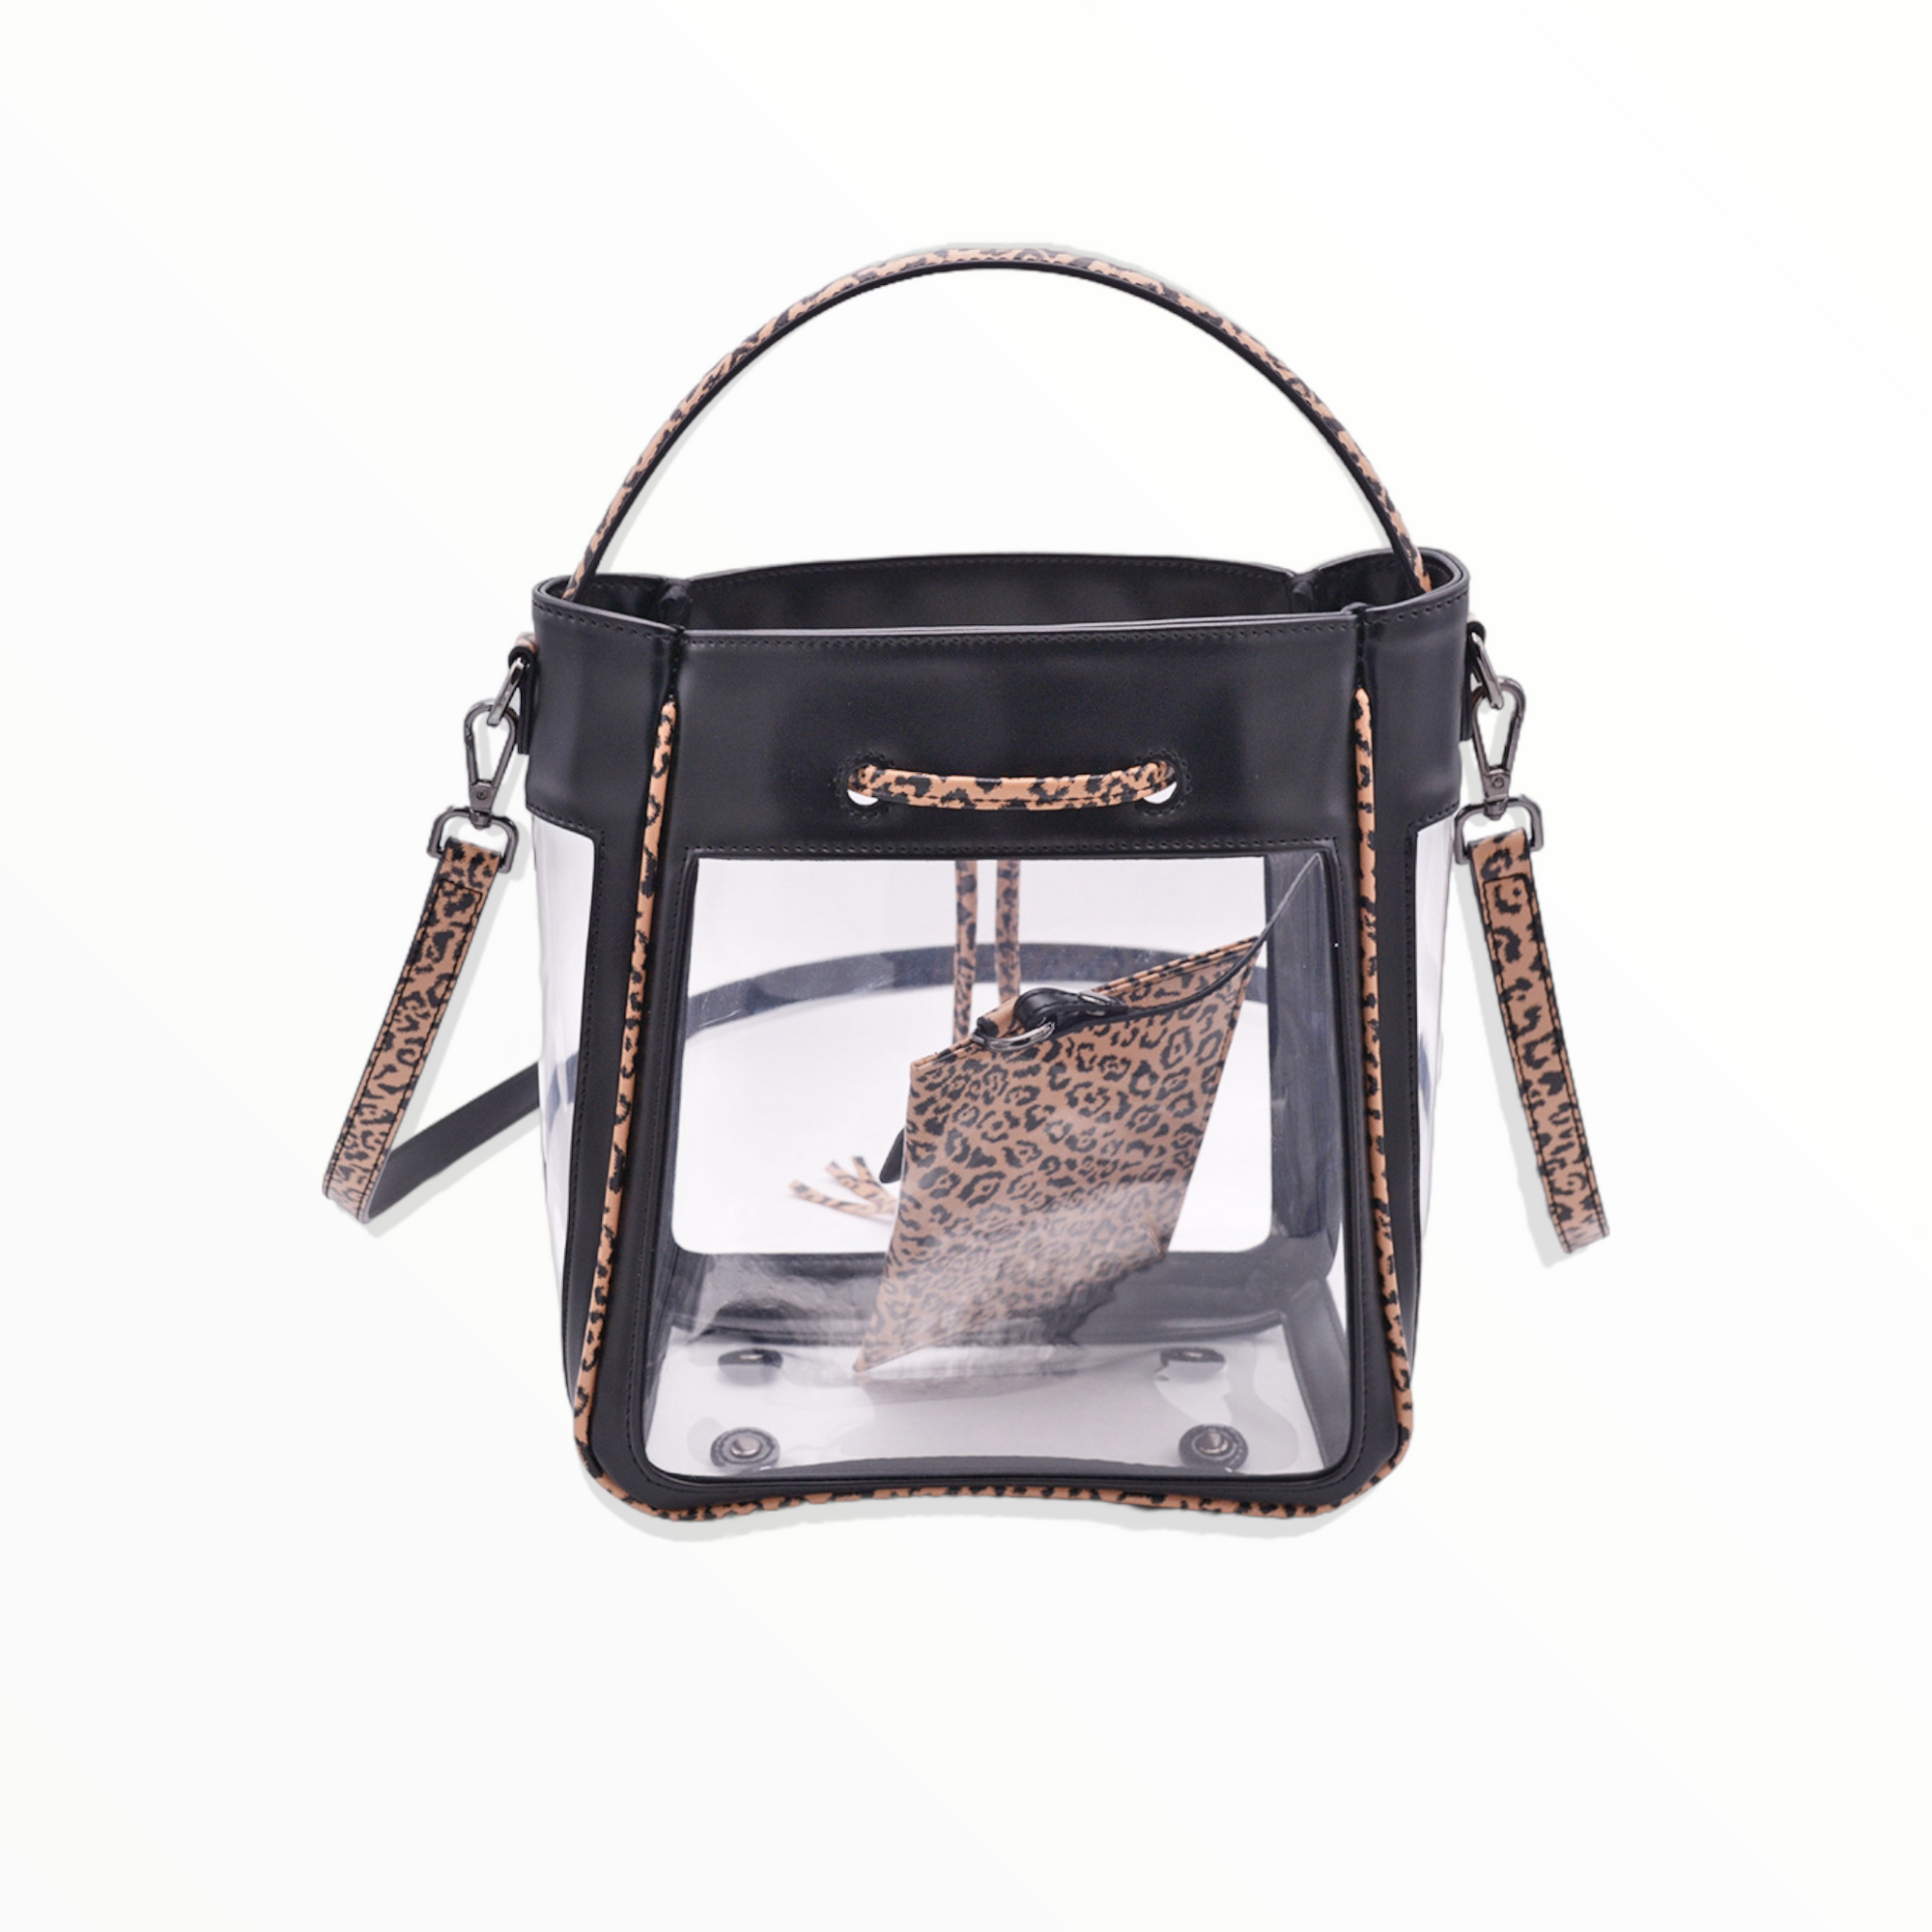 clear bag policy handbag - cheetah black - transparent bucket stadium bag crossbody 